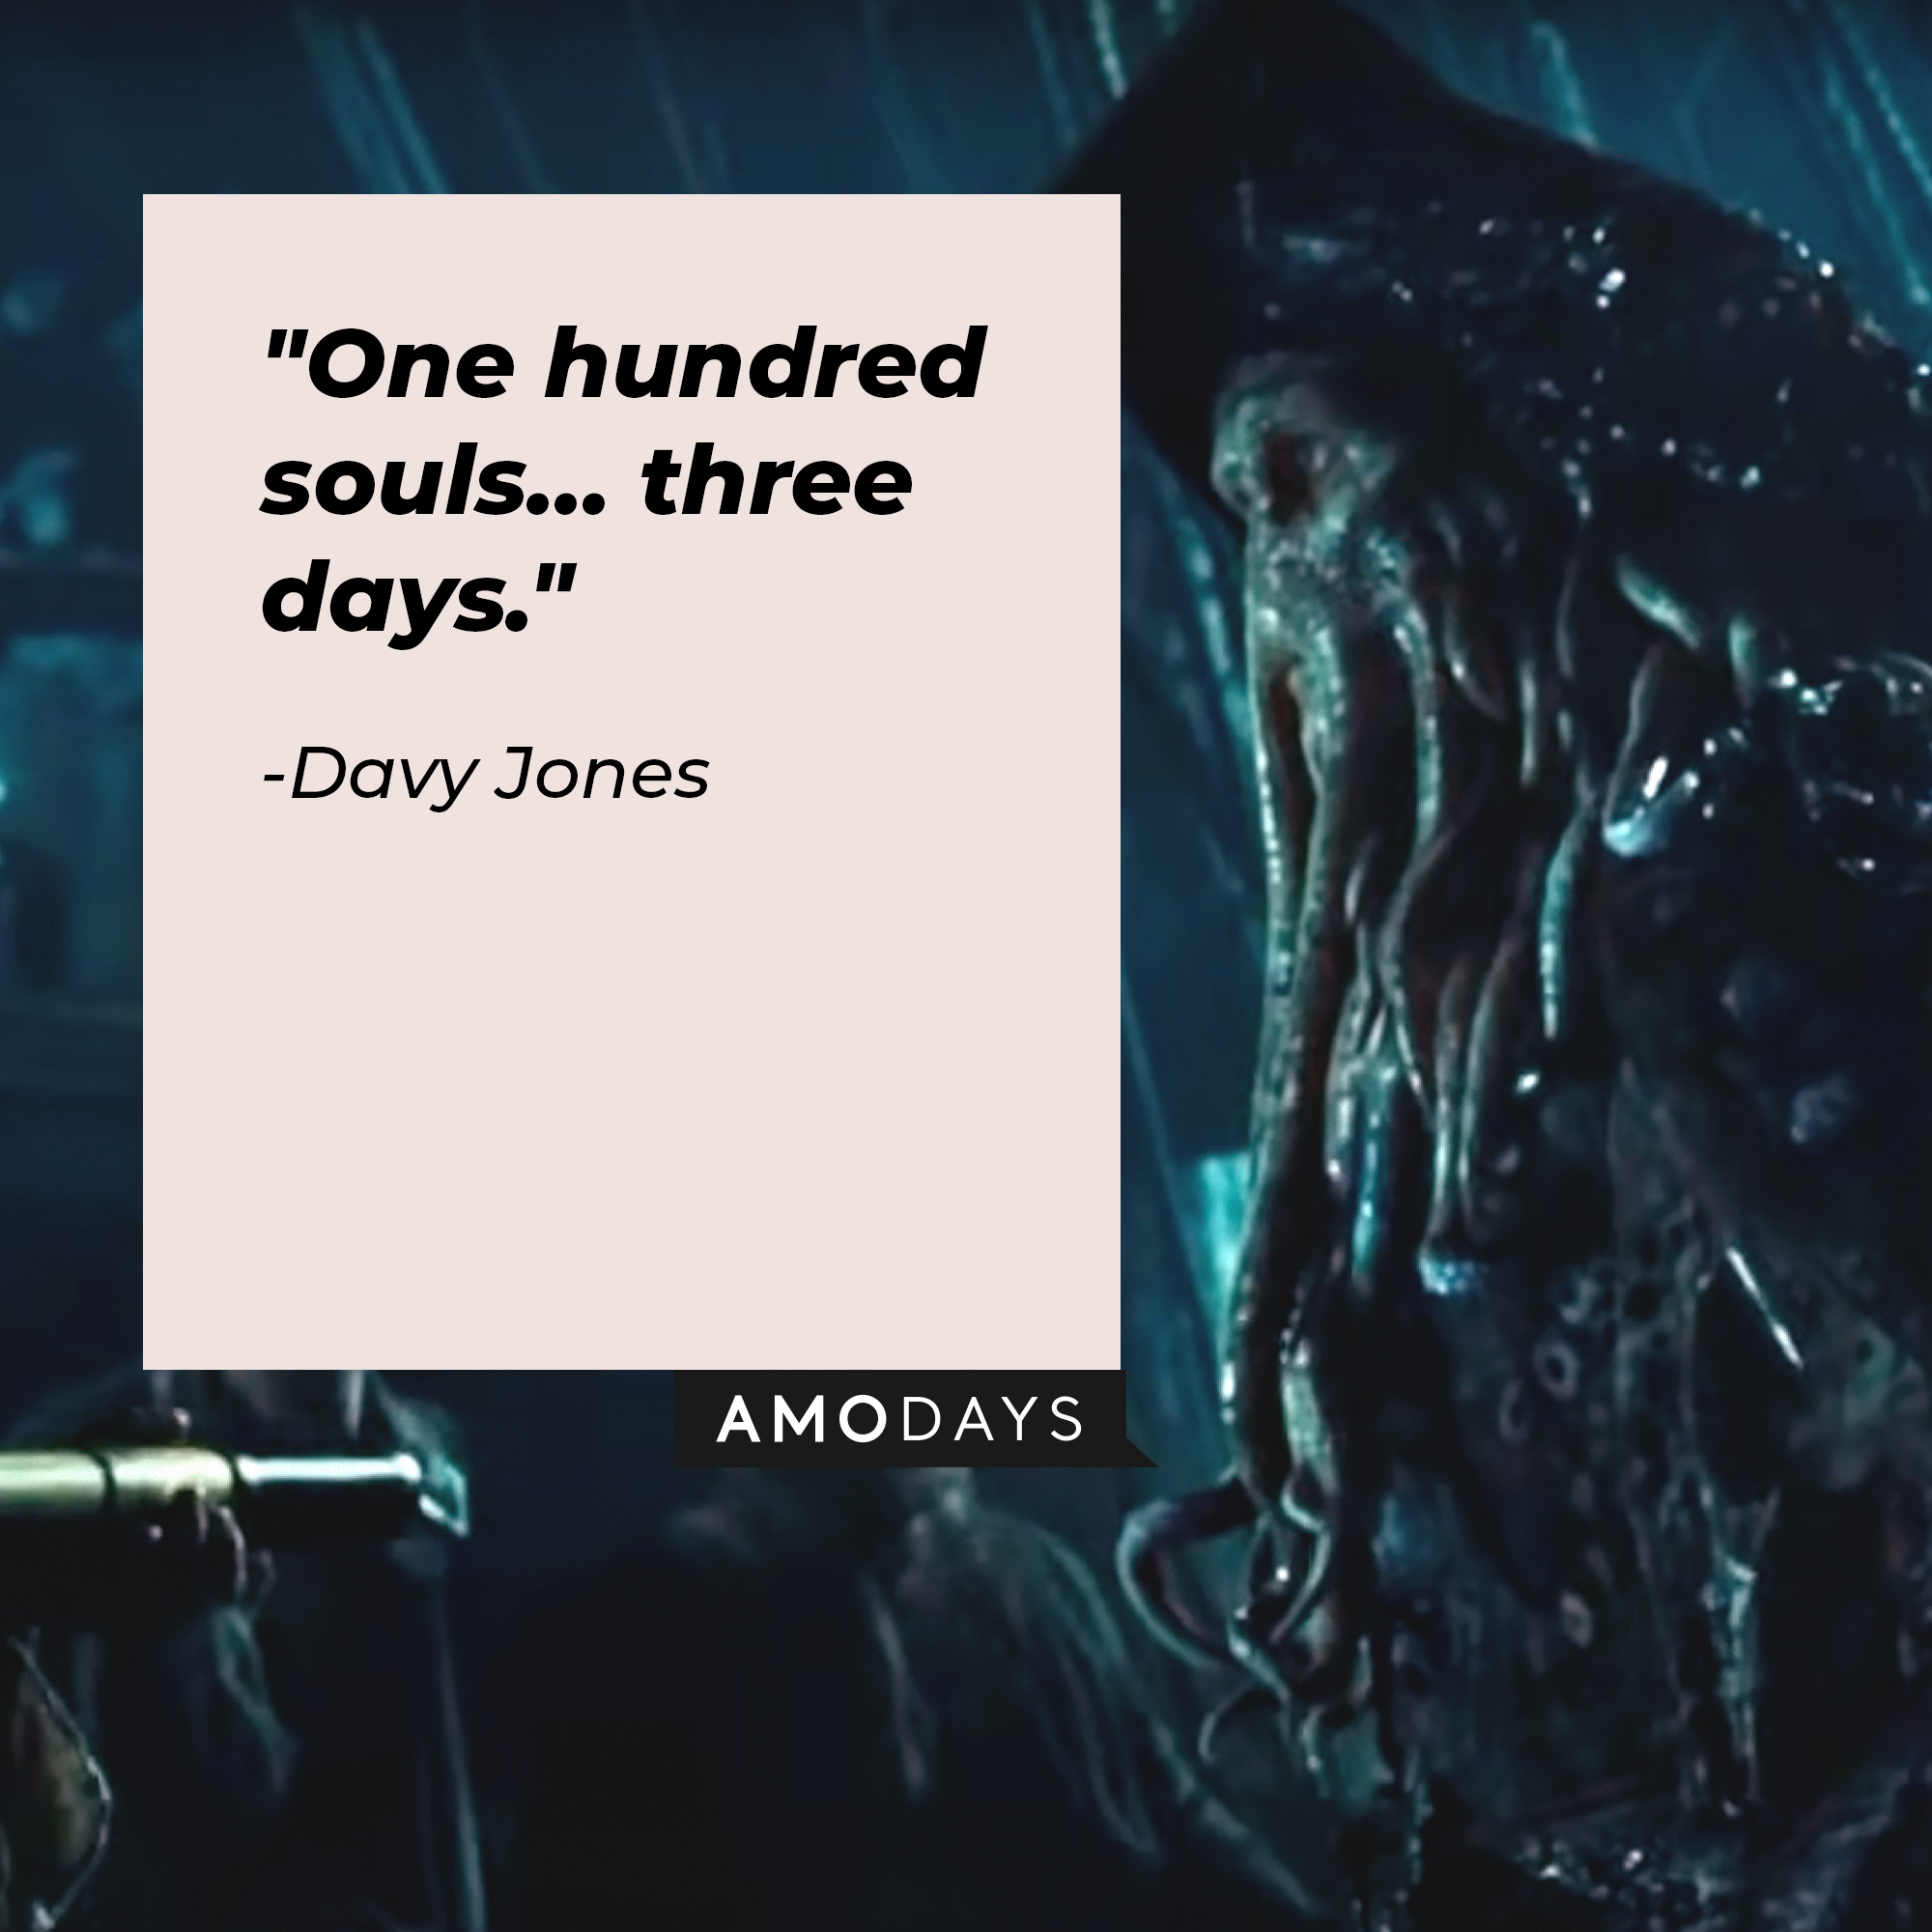 Davy Jones's quotes: "One hundred souls… three days." | Image: AmoDays